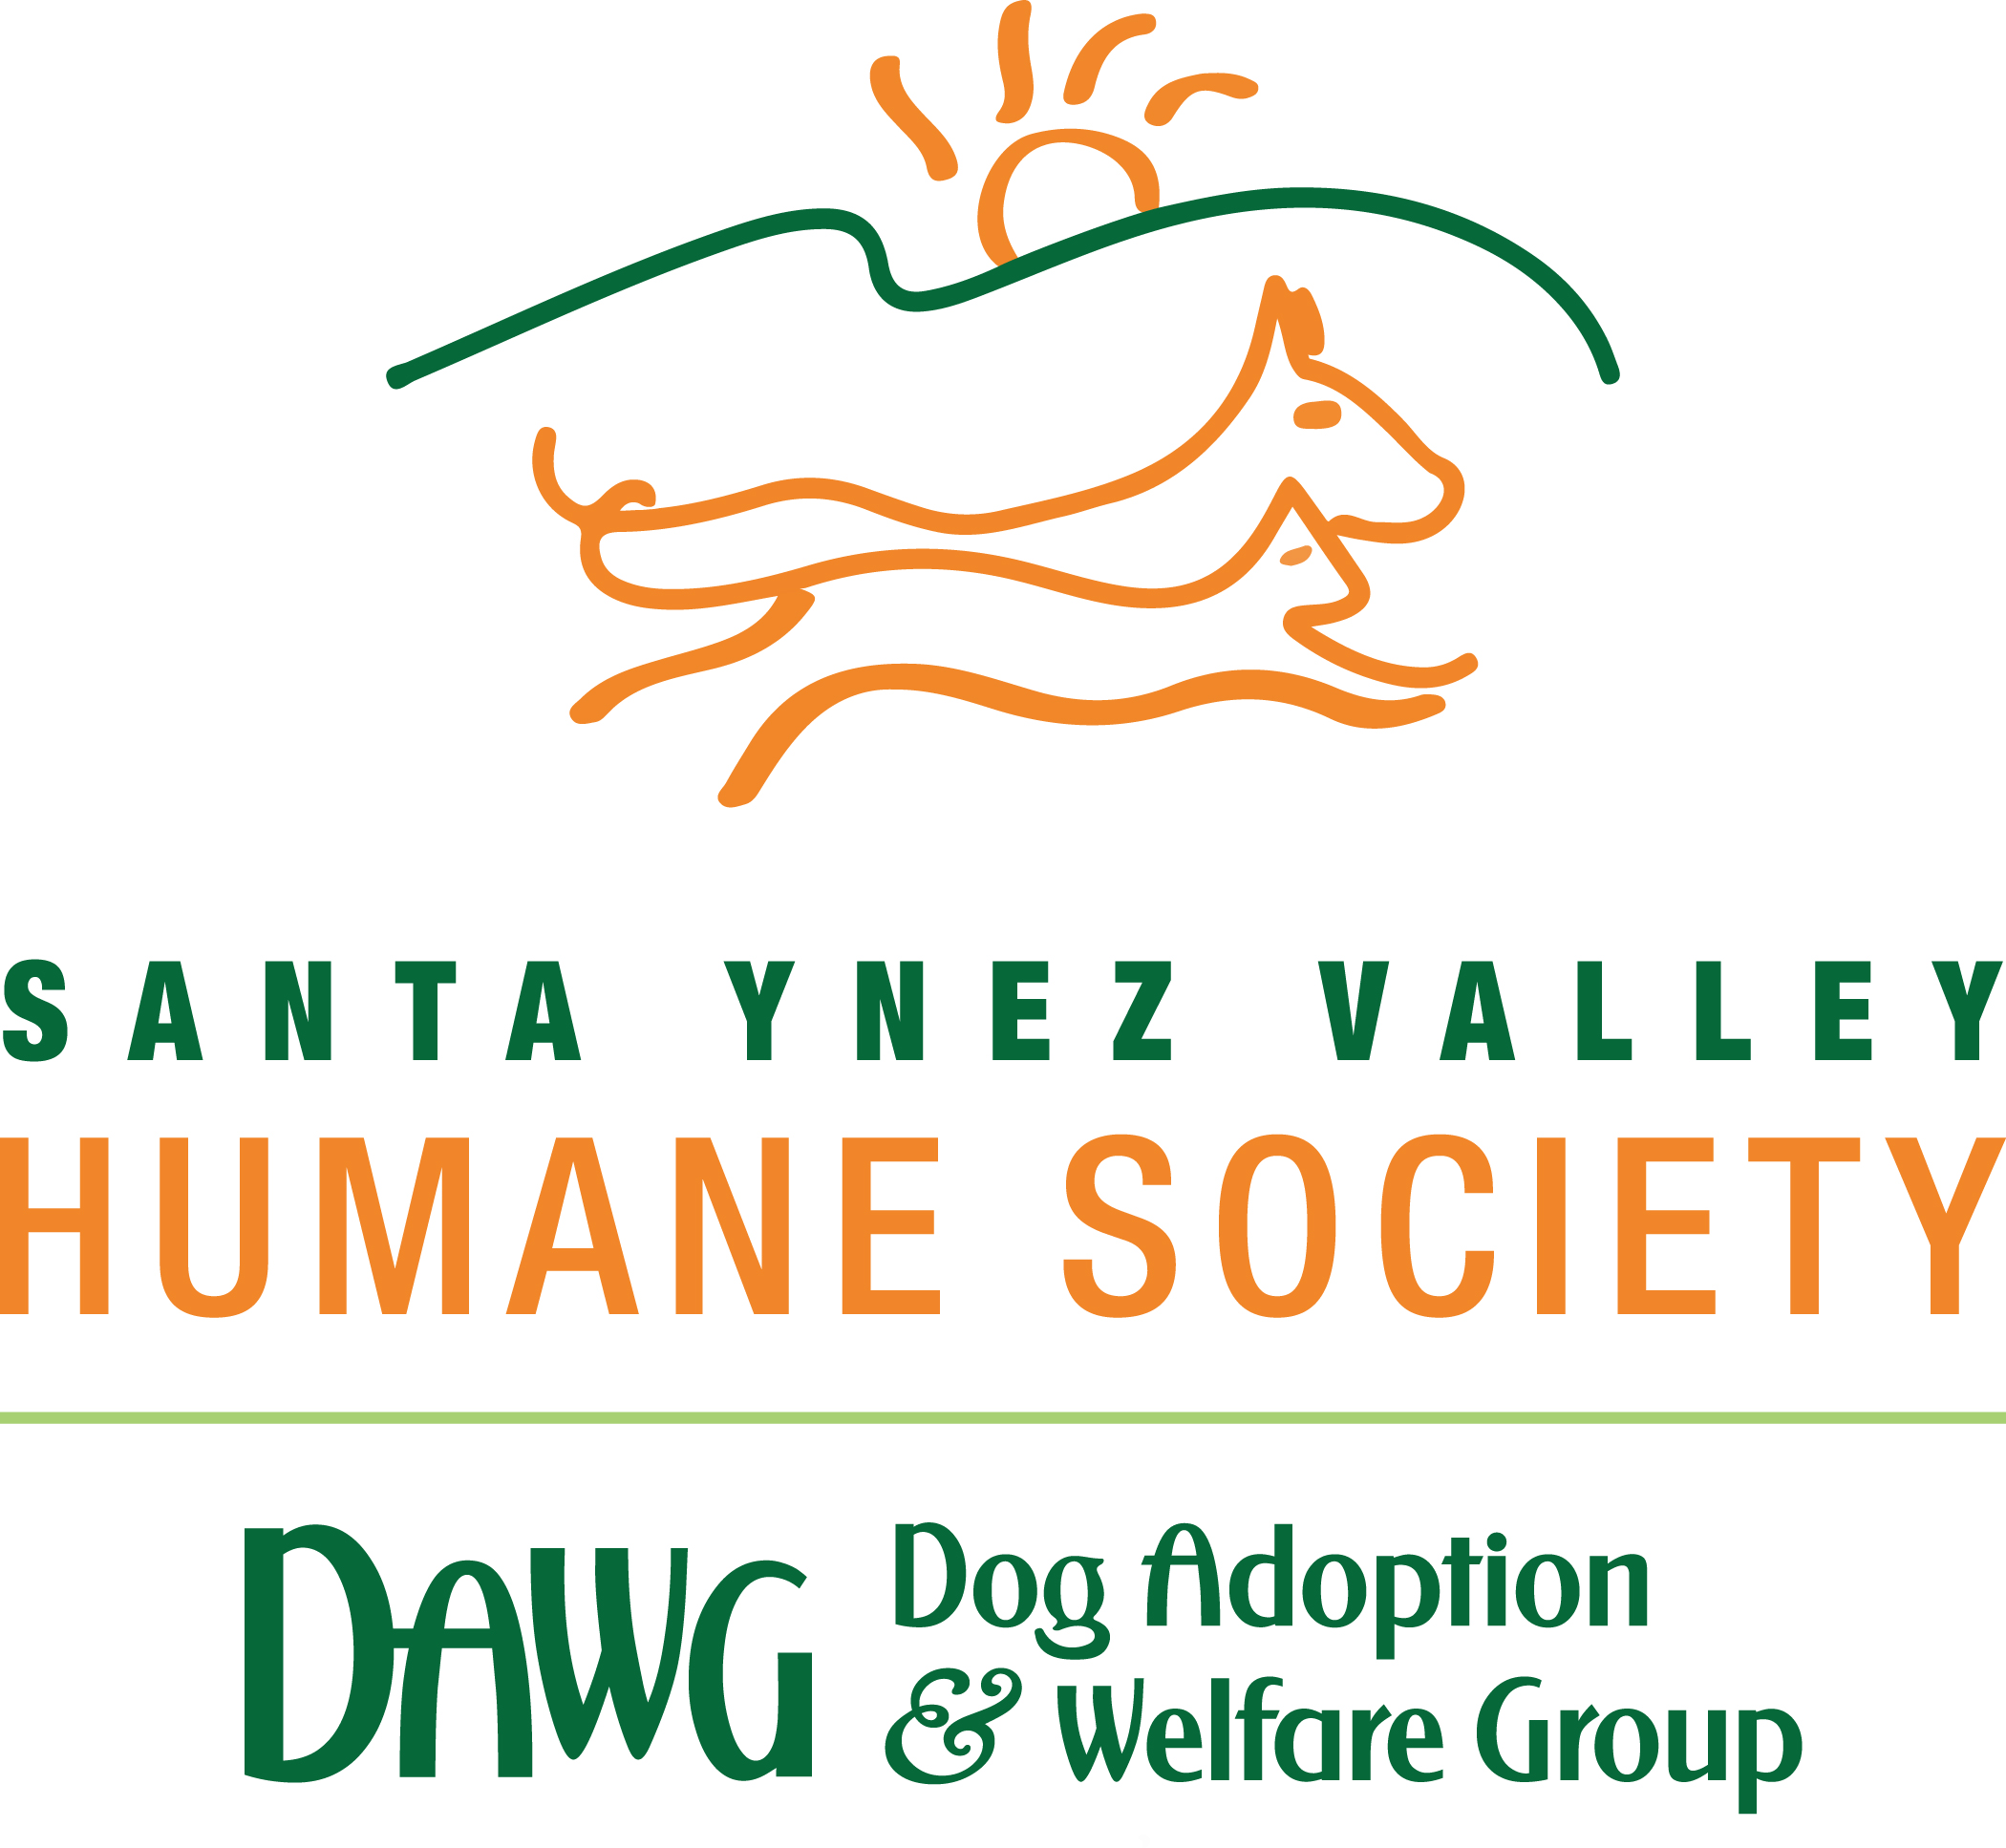 Santa Ynez Valley Humane Society & D.A.W.G